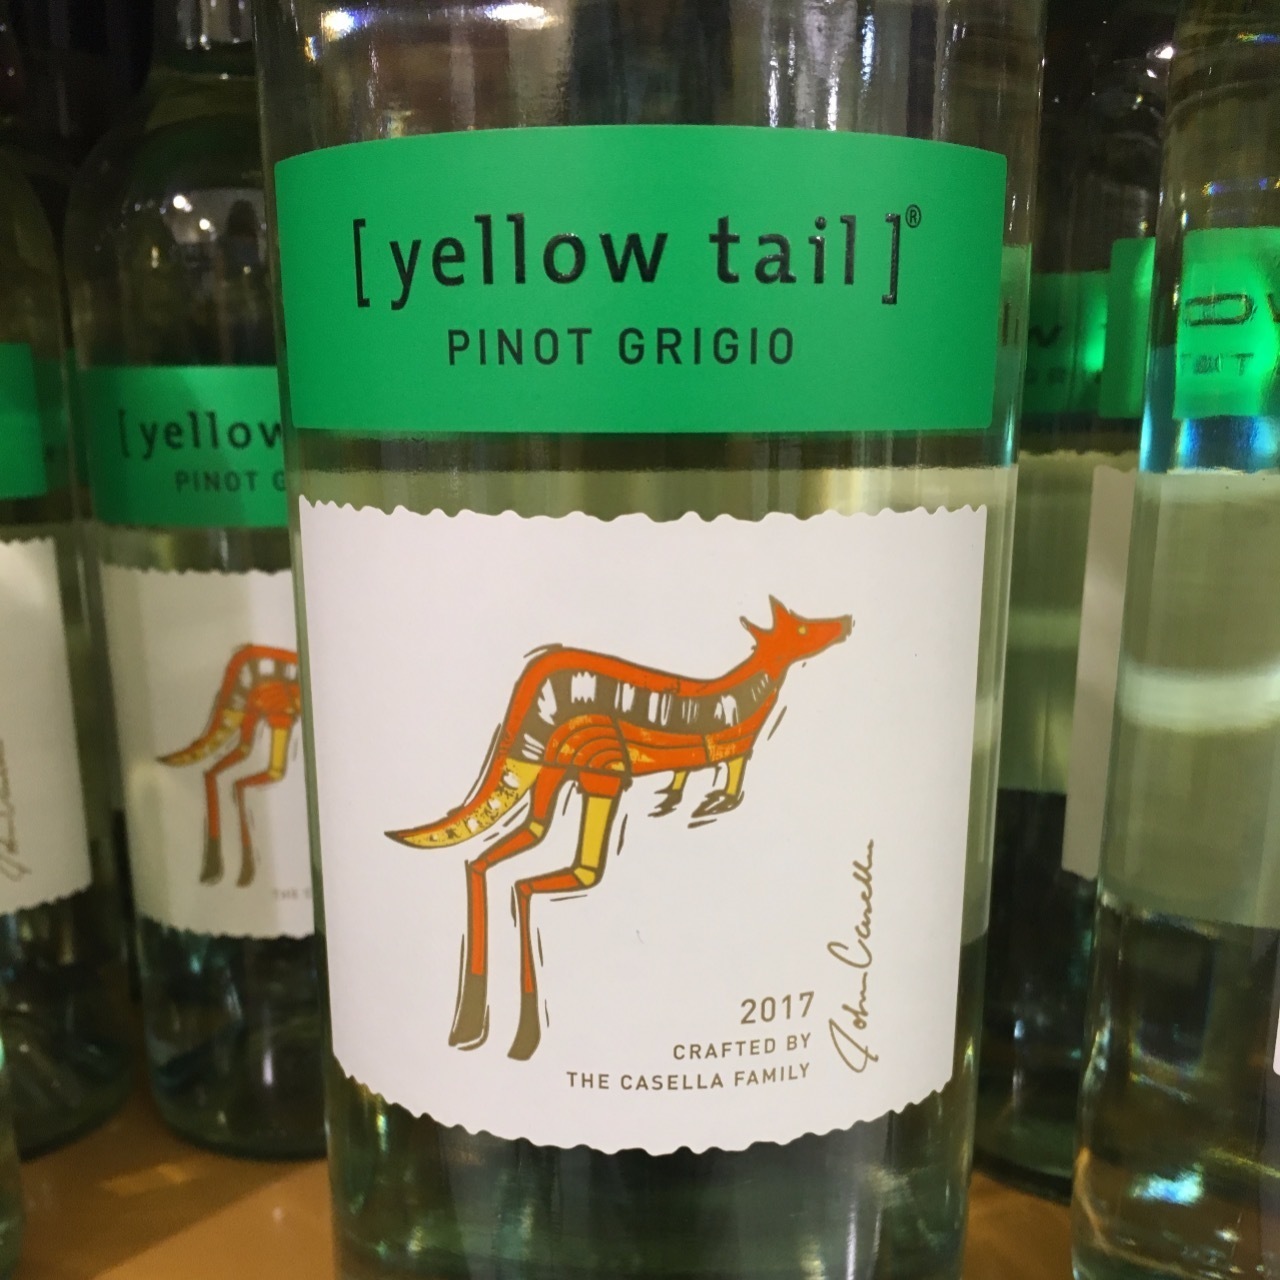 counterfeit yellow tail wine